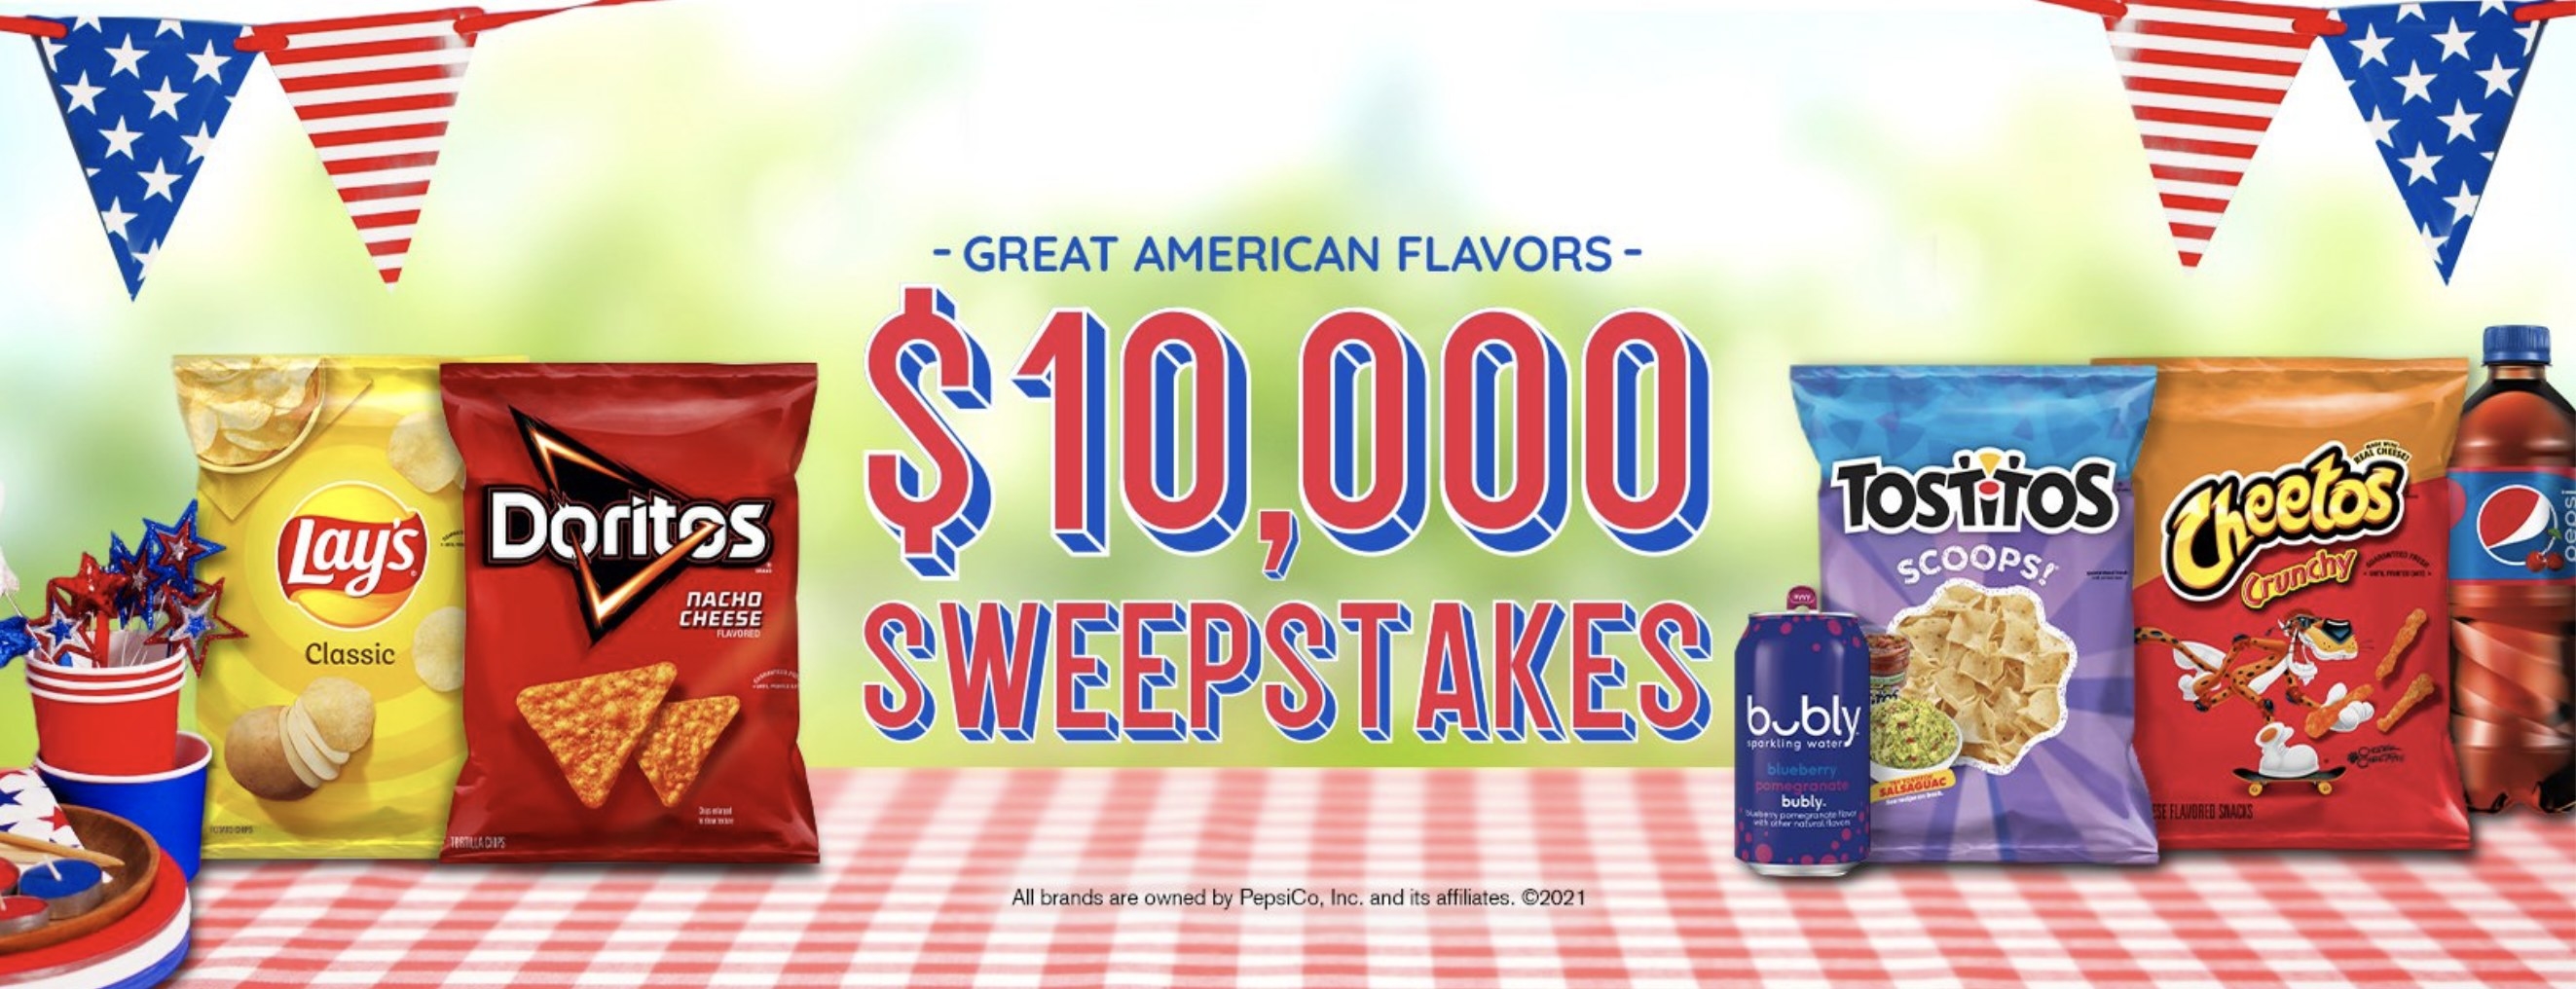 Pepsico Tasty Rewards Sweepstakes Graphic